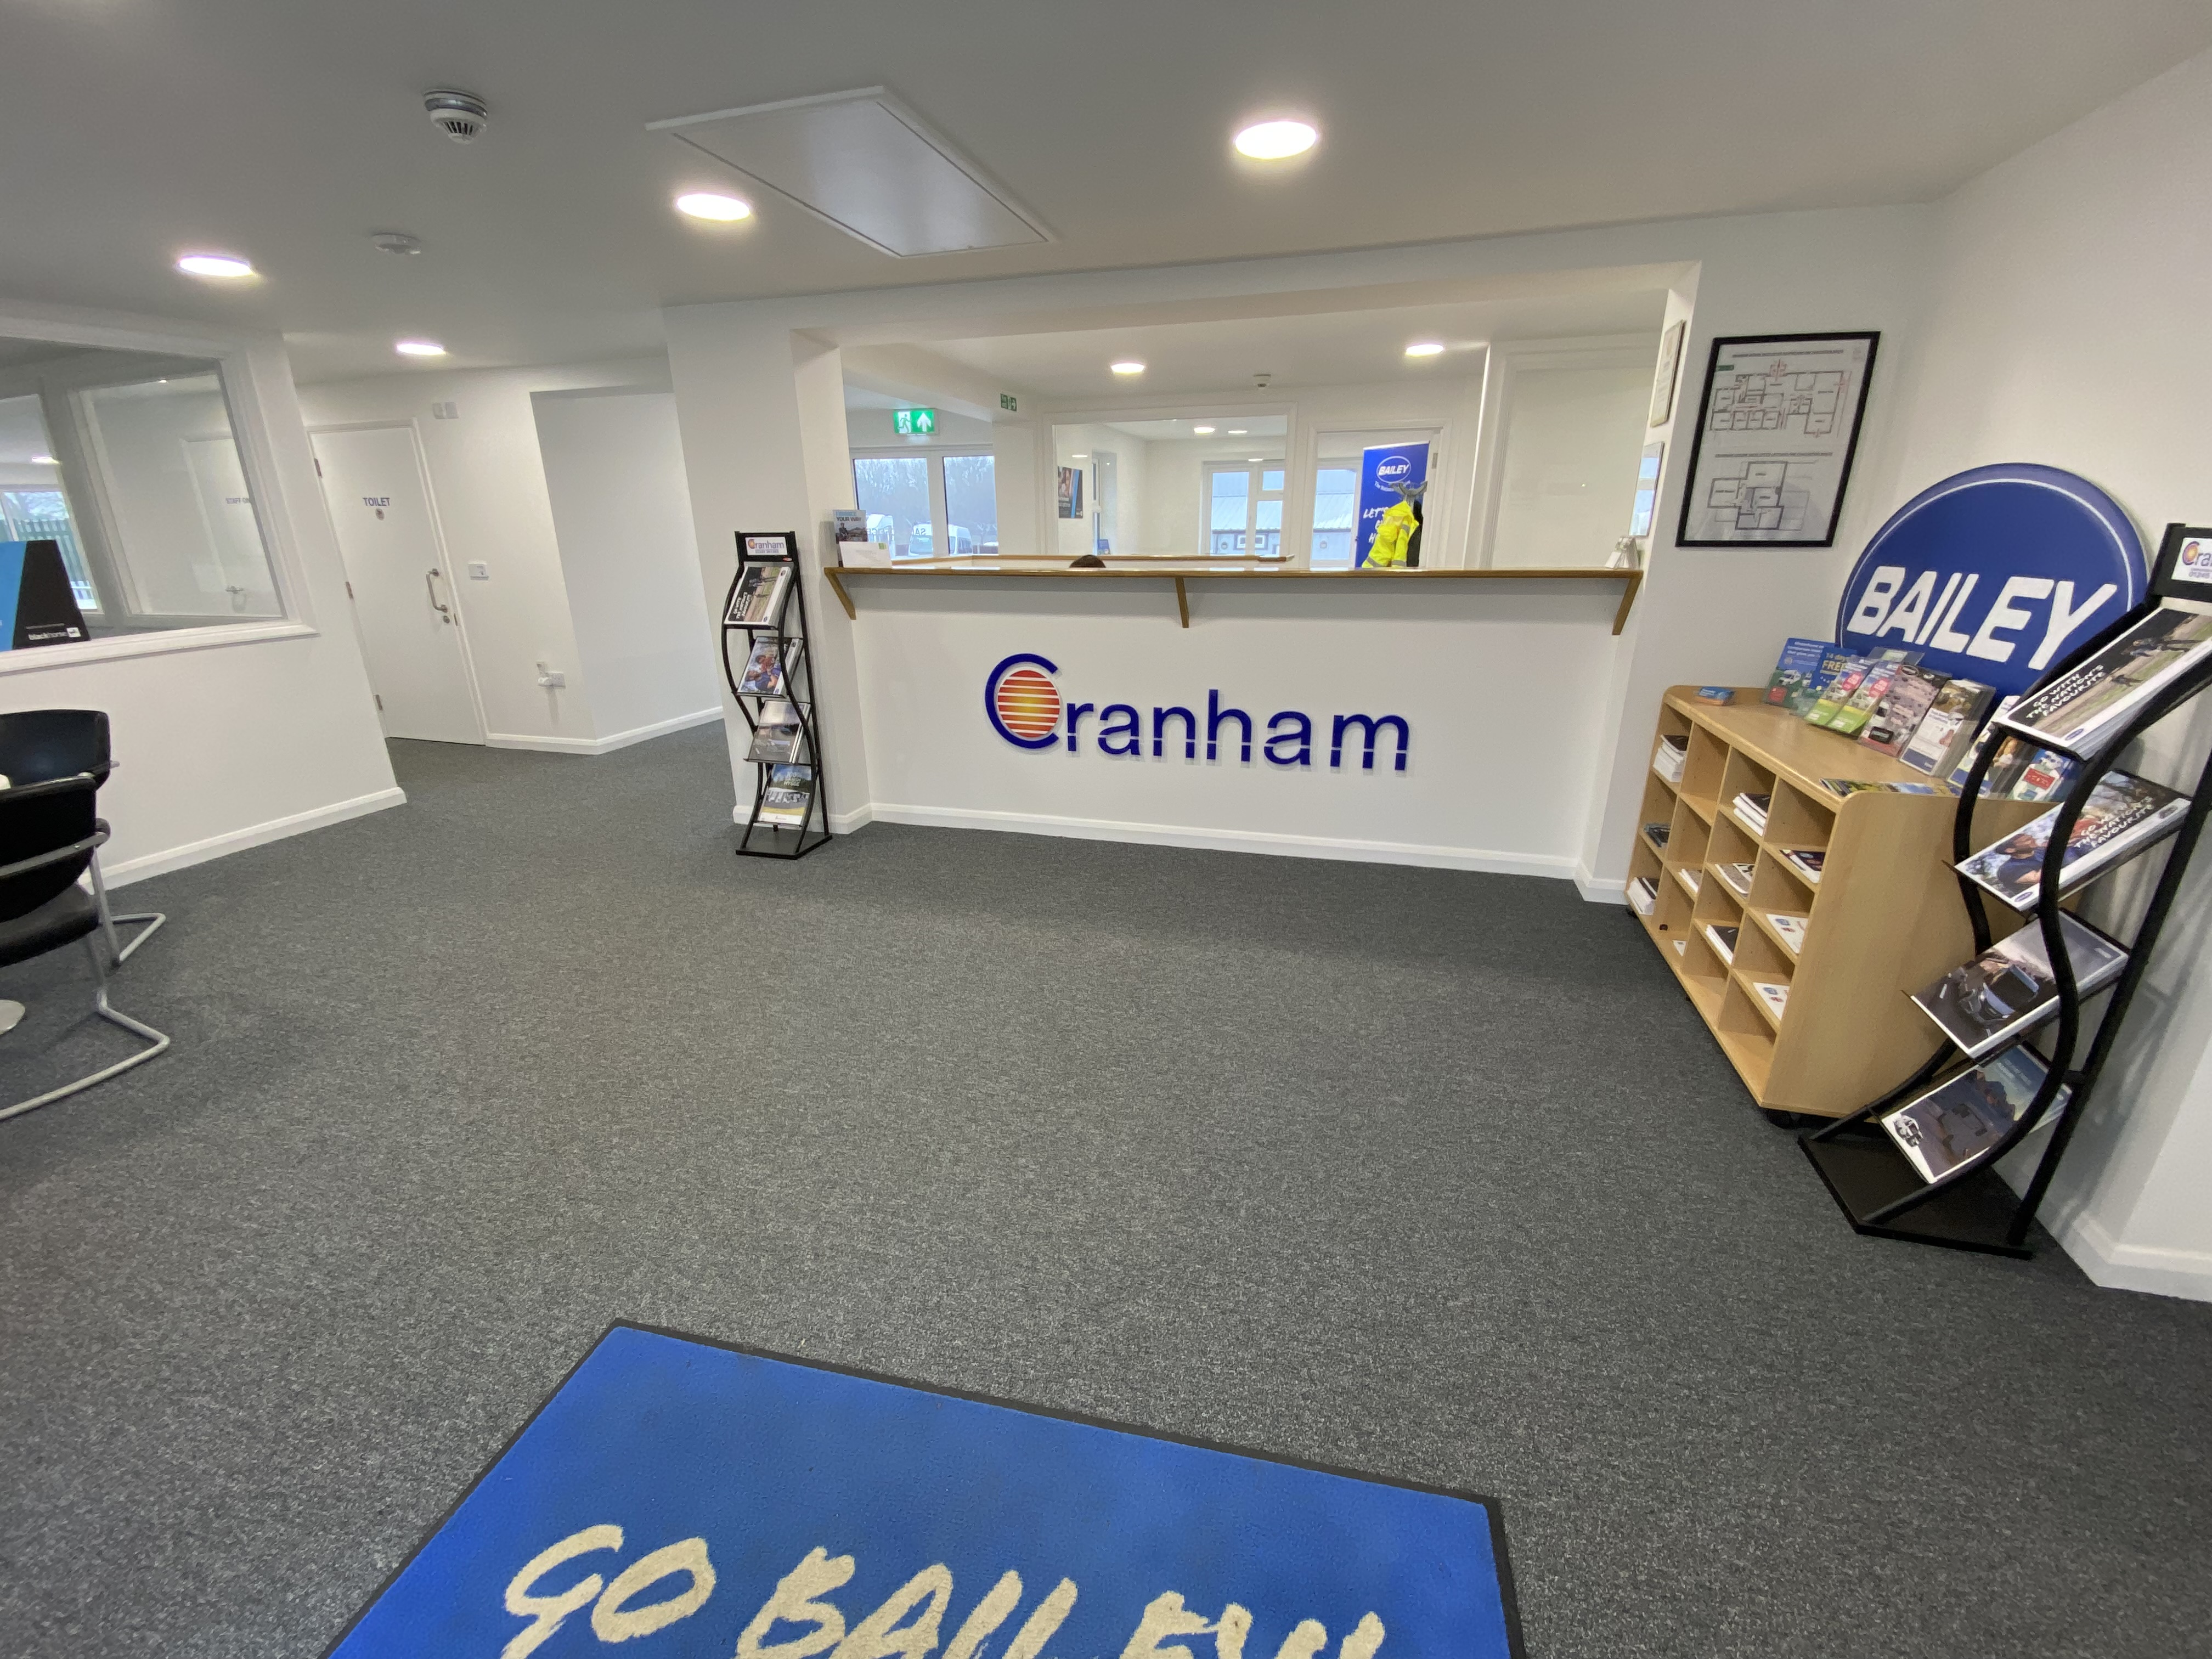 Inside the main office of Cranham Leisuresales LTD